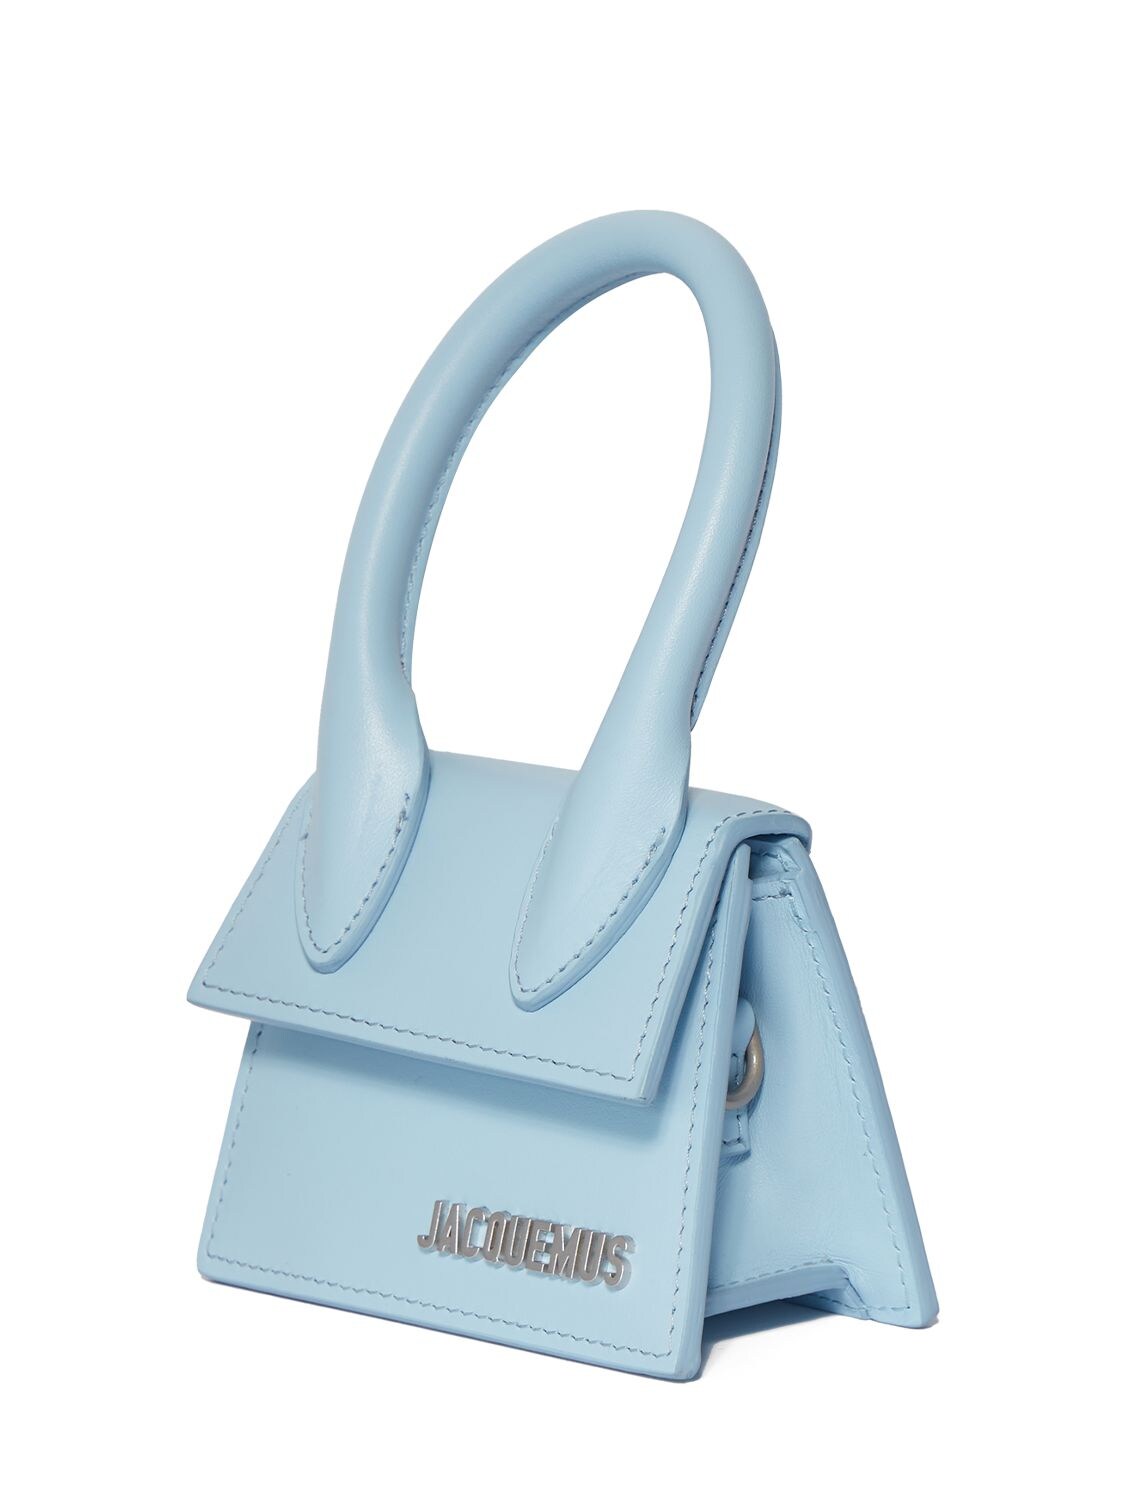 Shop Jacquemus Le Chiquito Homme Top Handle Bag In Light Blue